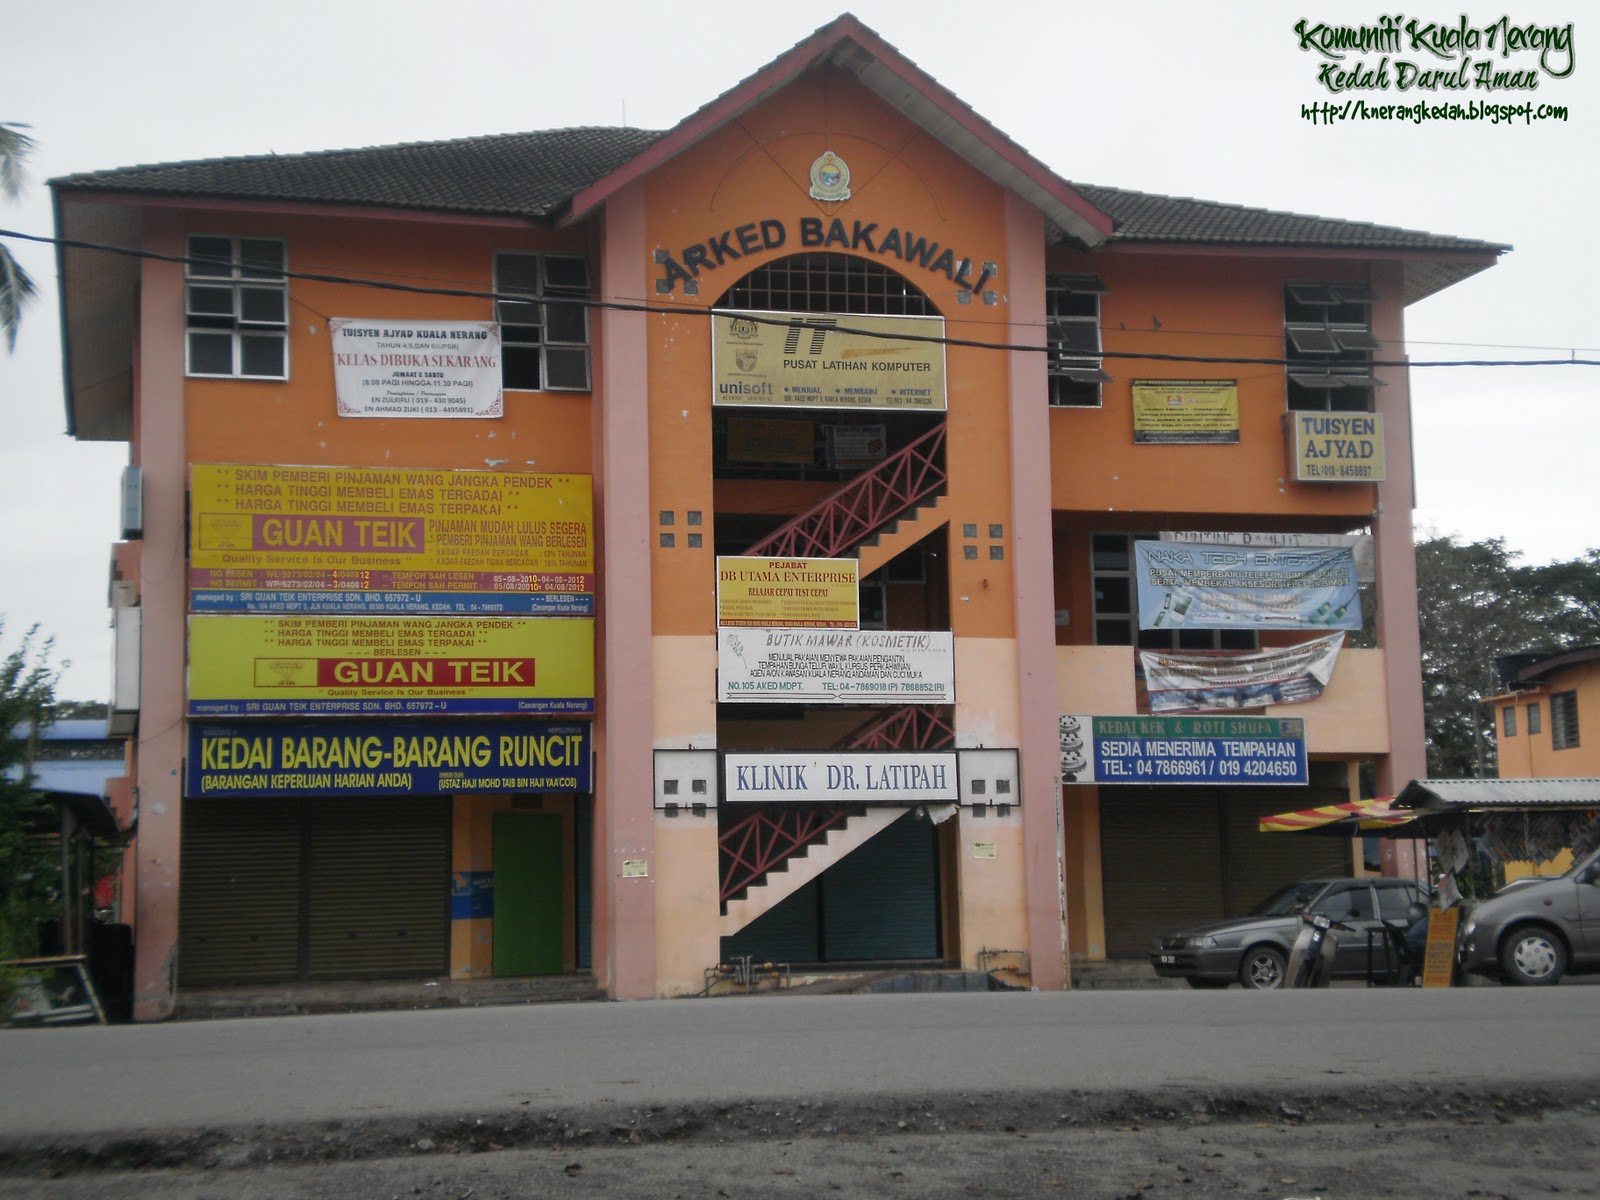 Kuala Nerang: Bangunan Arked Bakawali